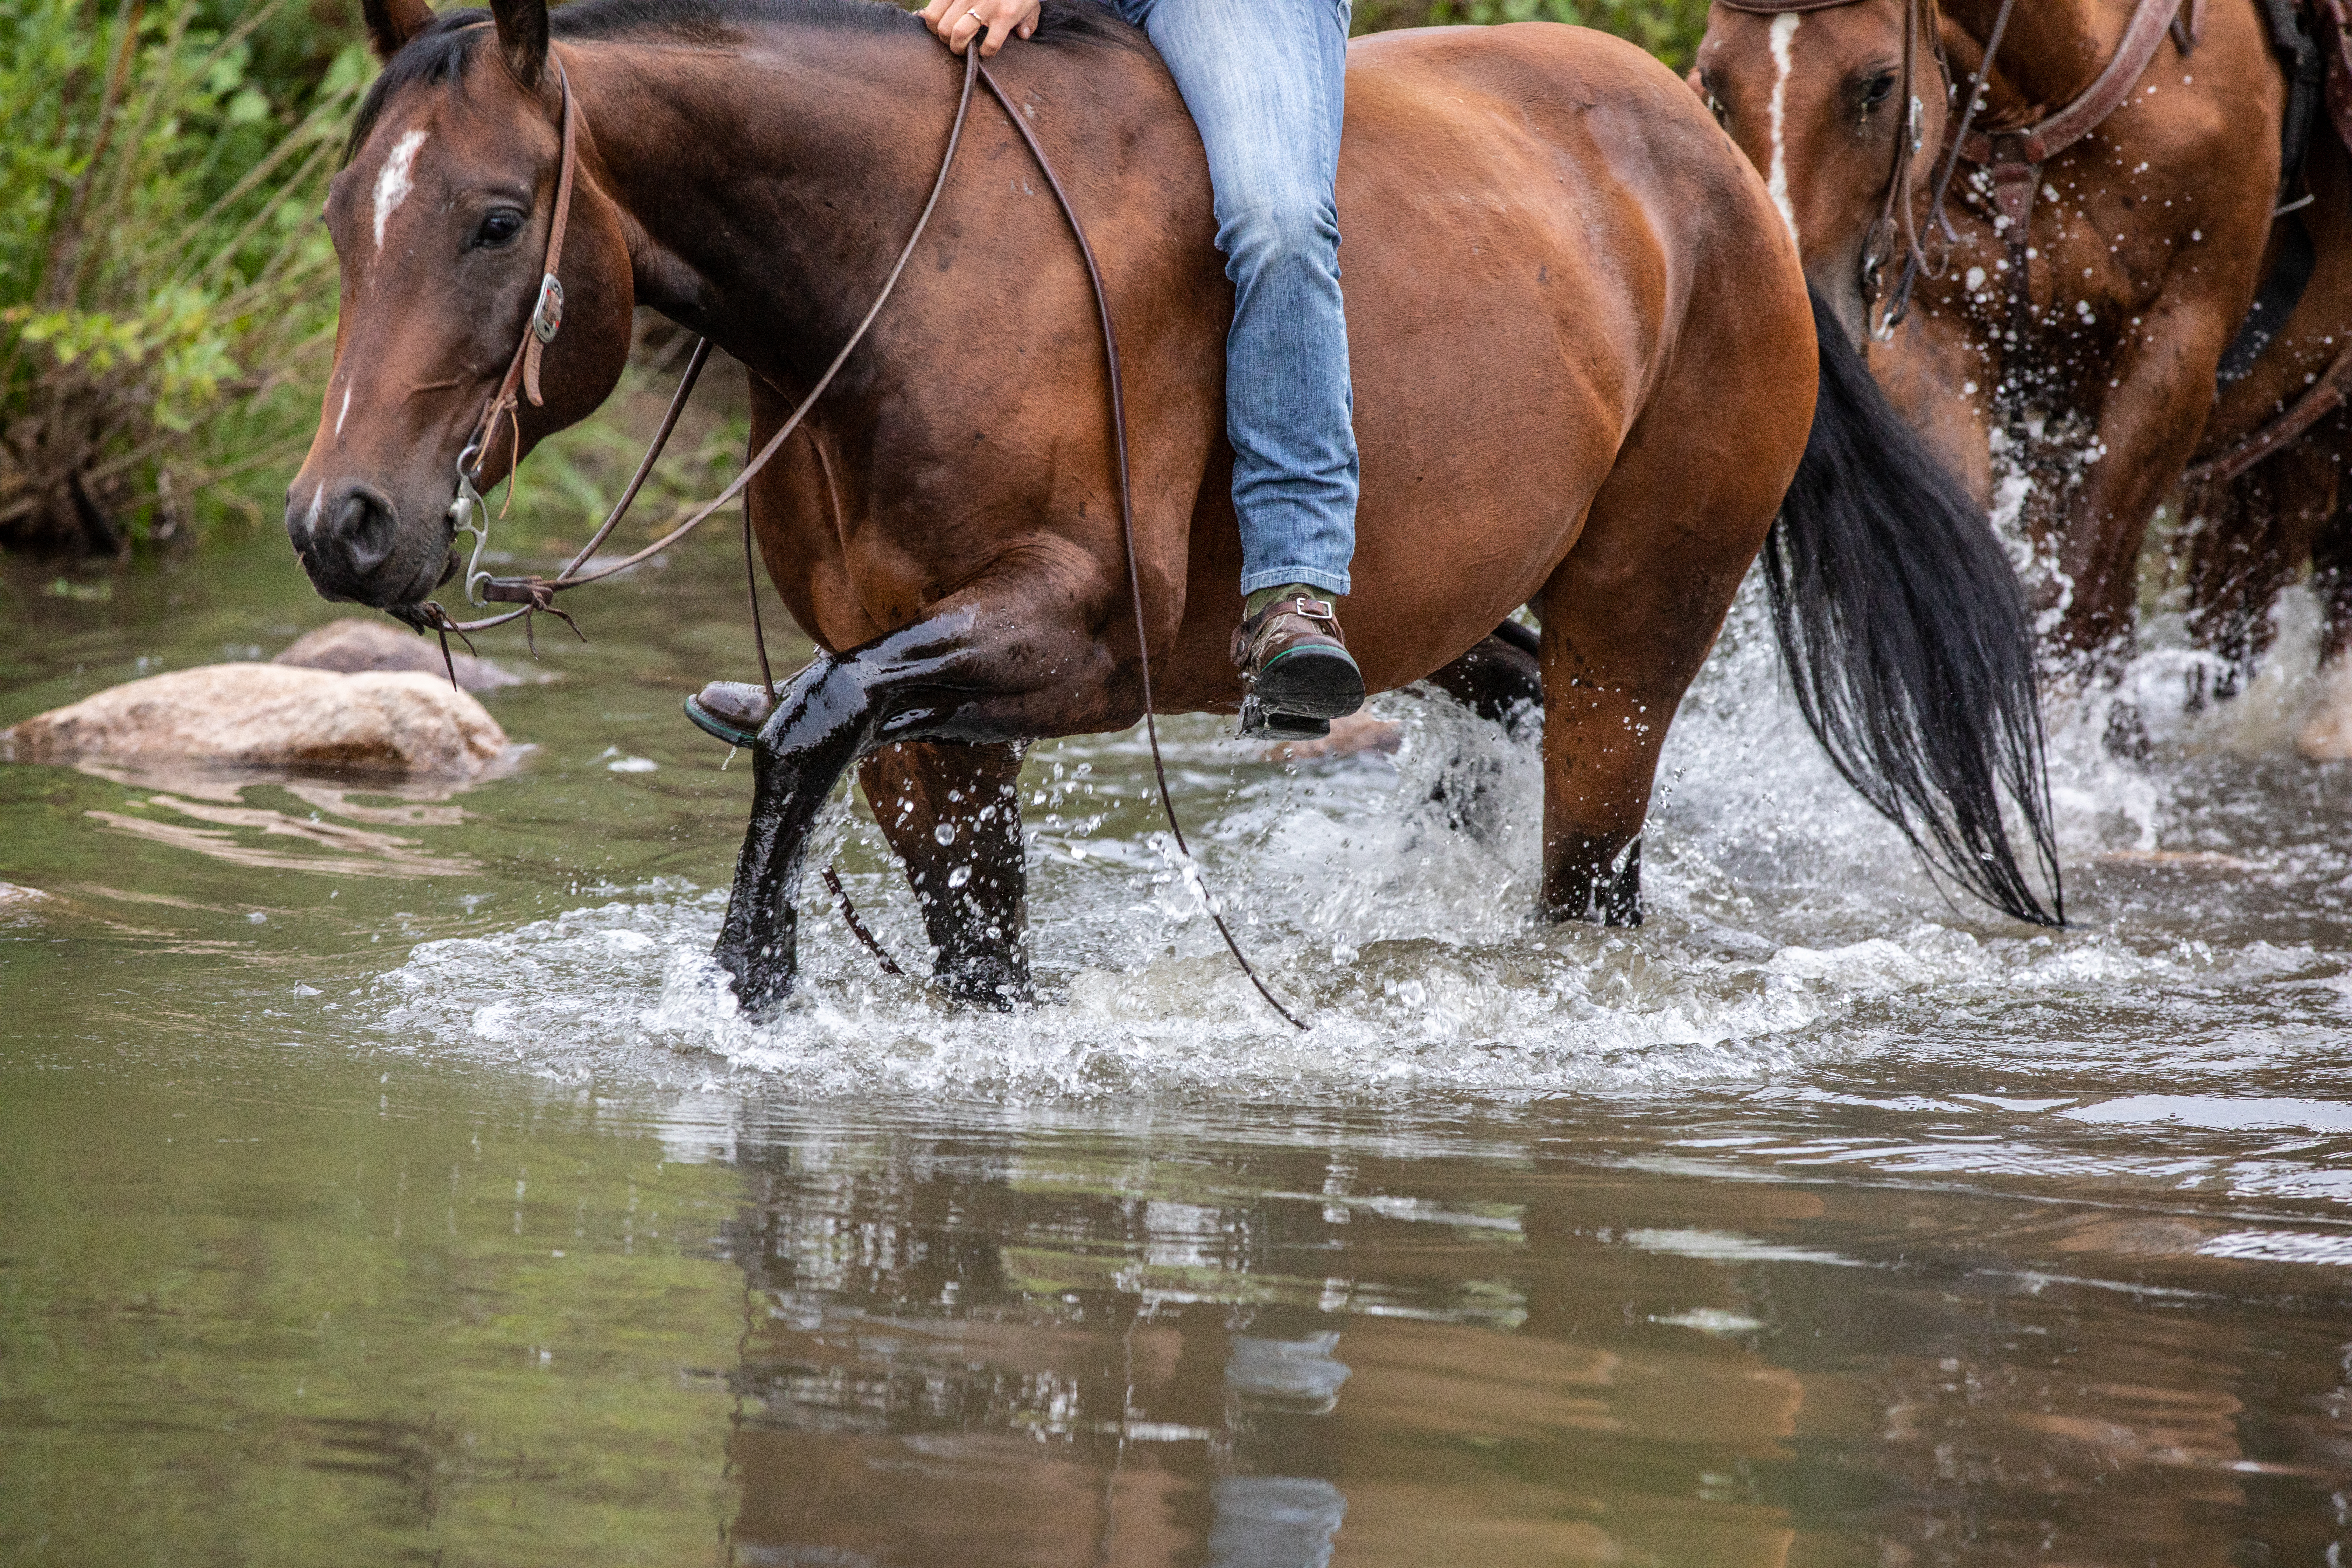 A horse being ridden through a stream, splashing water. 